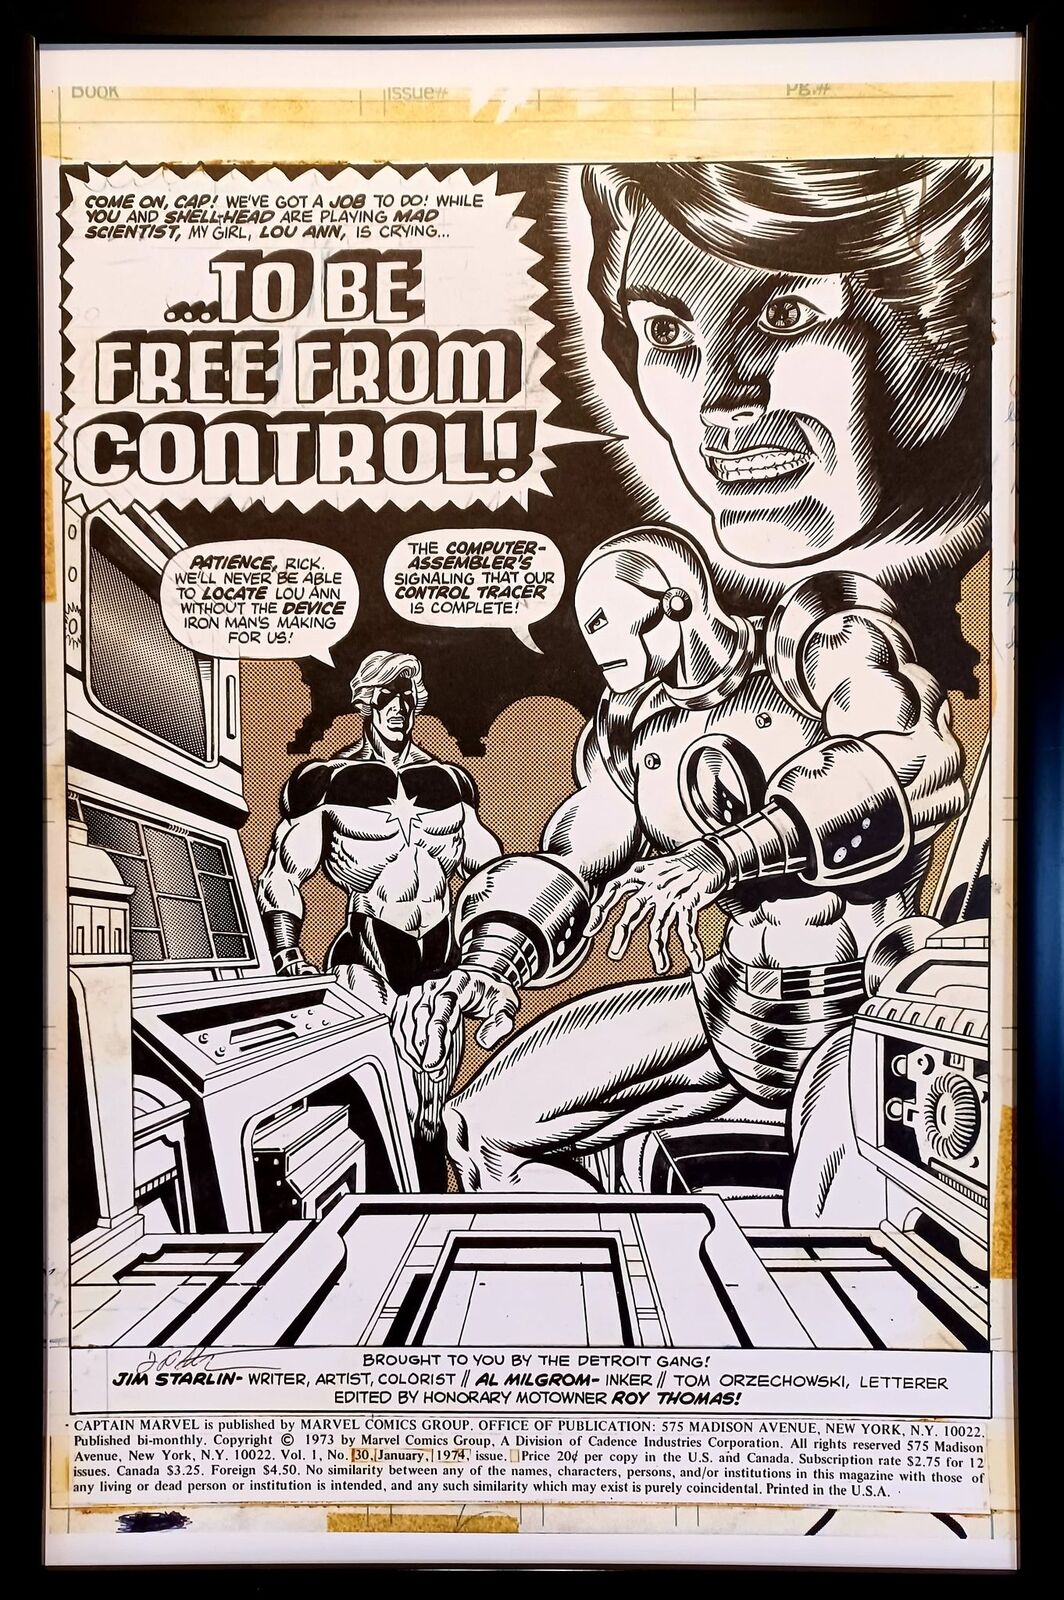 Captain Marvel #30 pg. 1 by Jim Starlin 11x17 FRAMED Original Art Print Comic Po